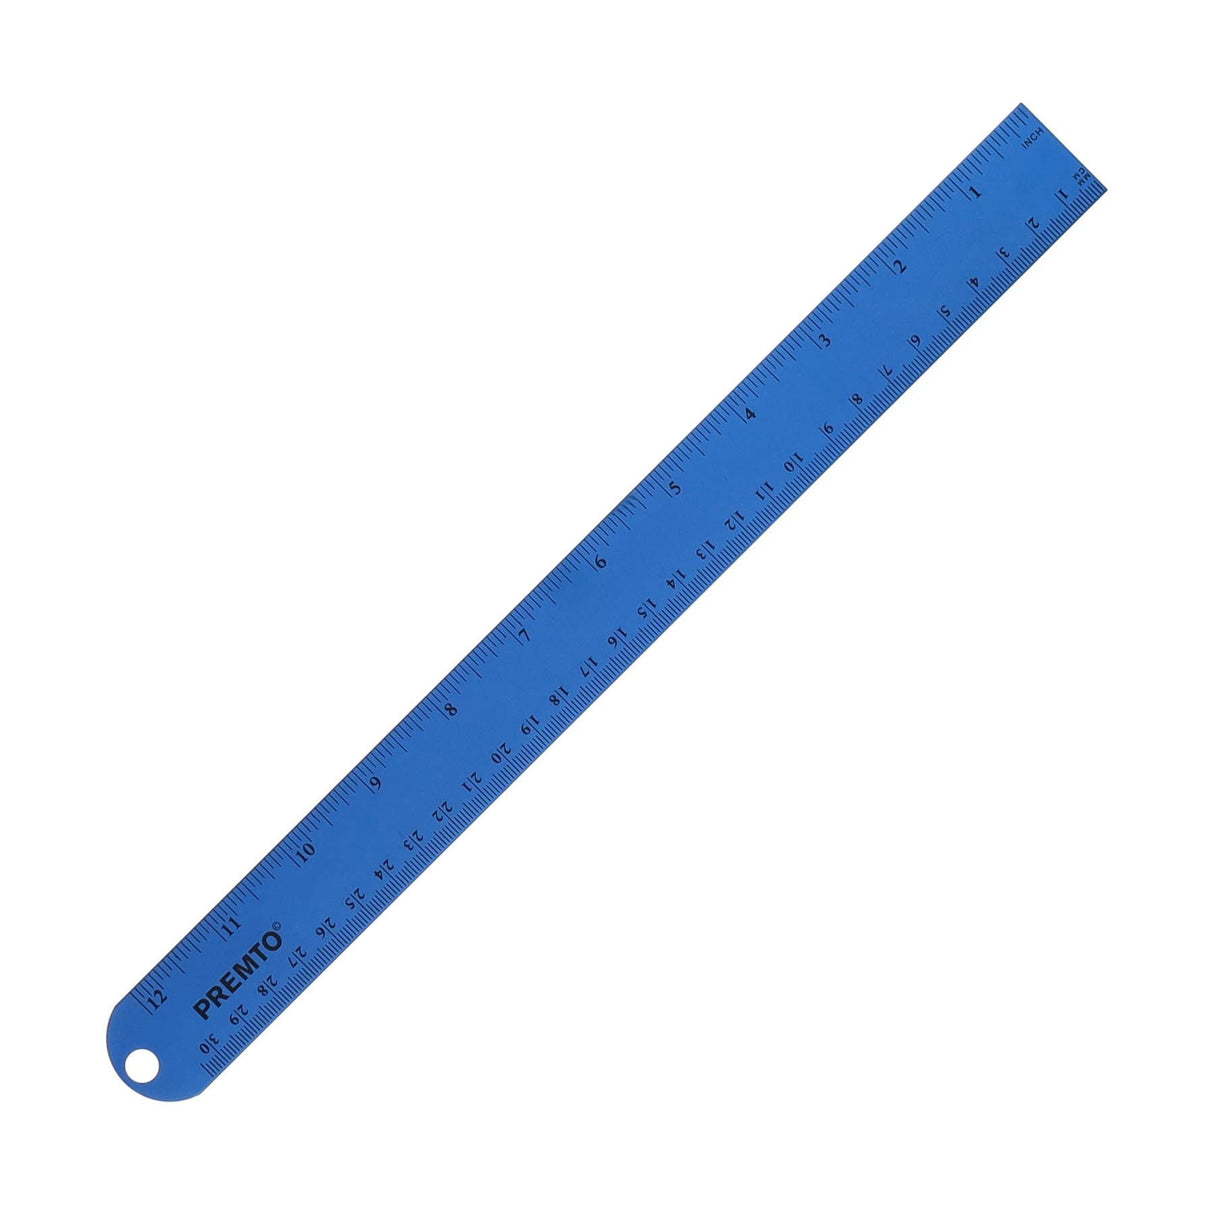 Premto S1 Aluminium Ruler 30cm - Printer Blue-Rulers-Premto|StationeryShop.co.uk